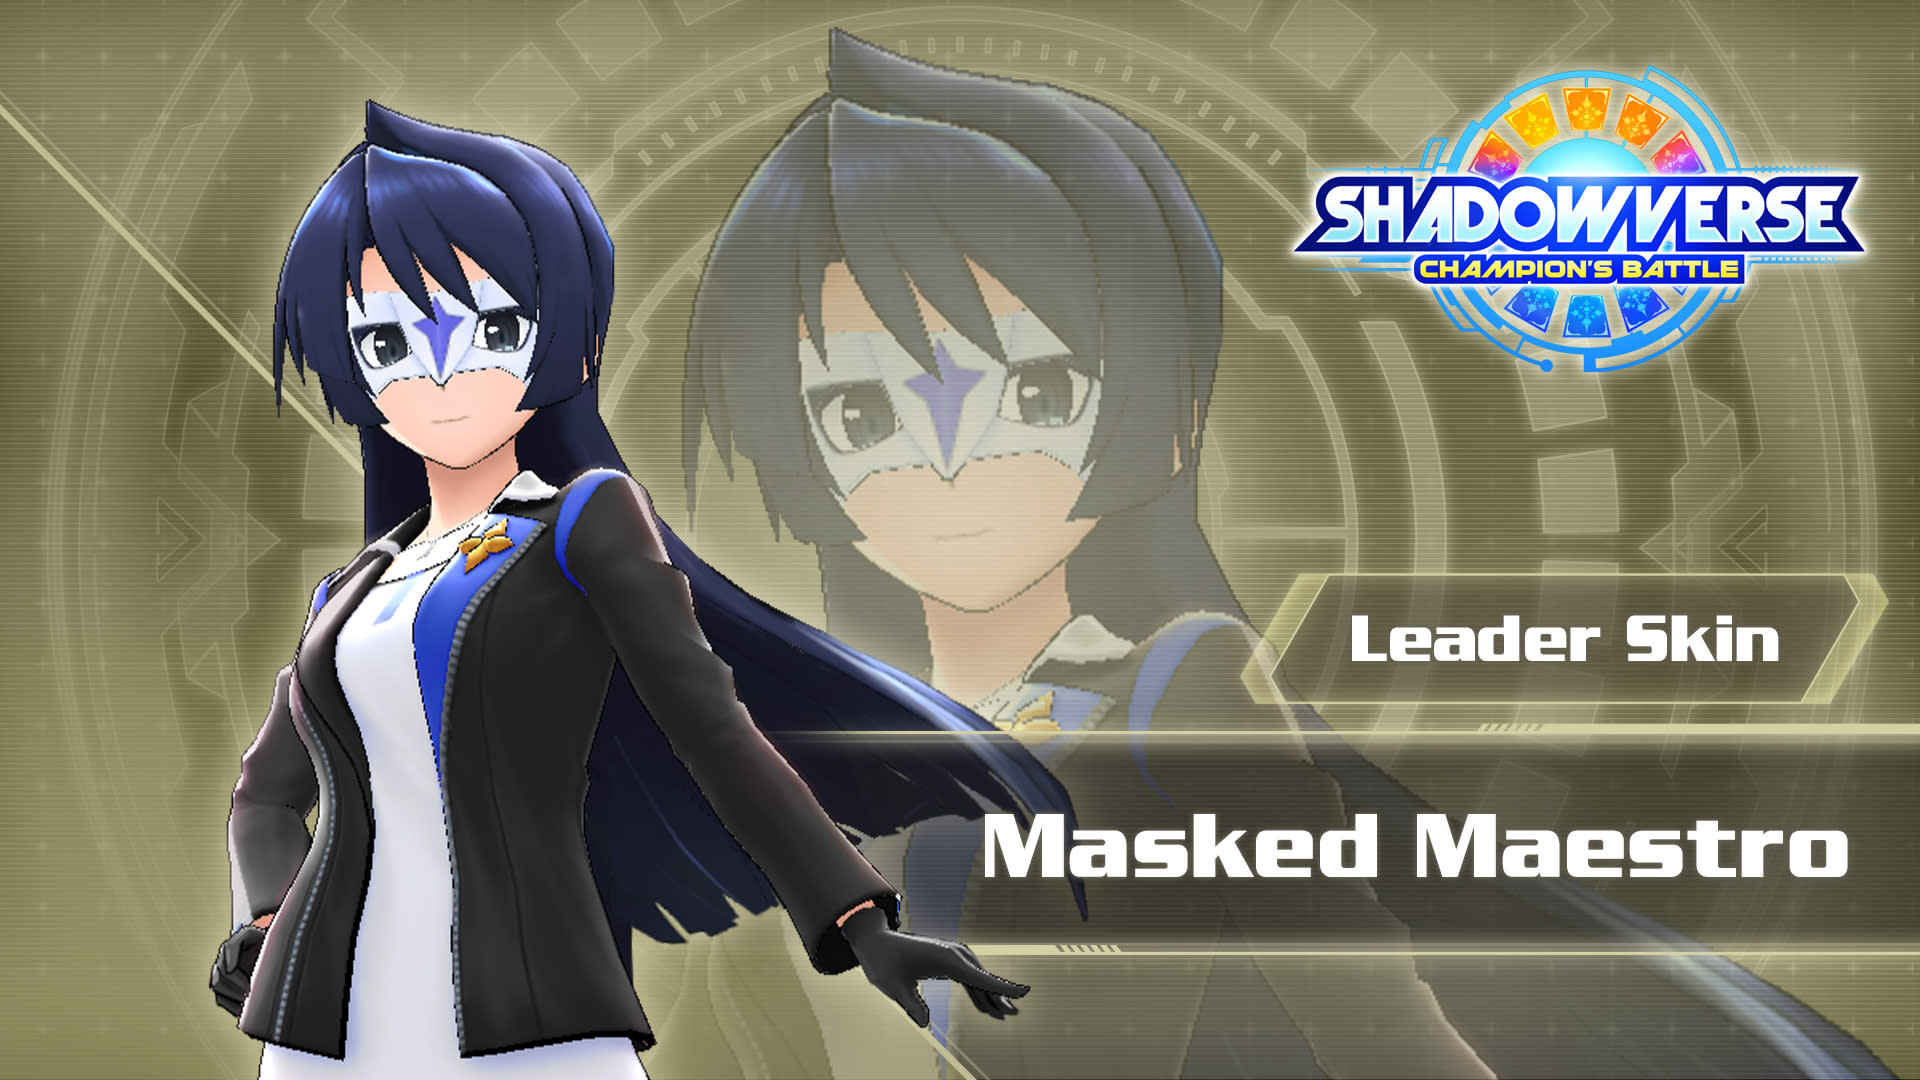 Leader Skin: "Masked Maestro"